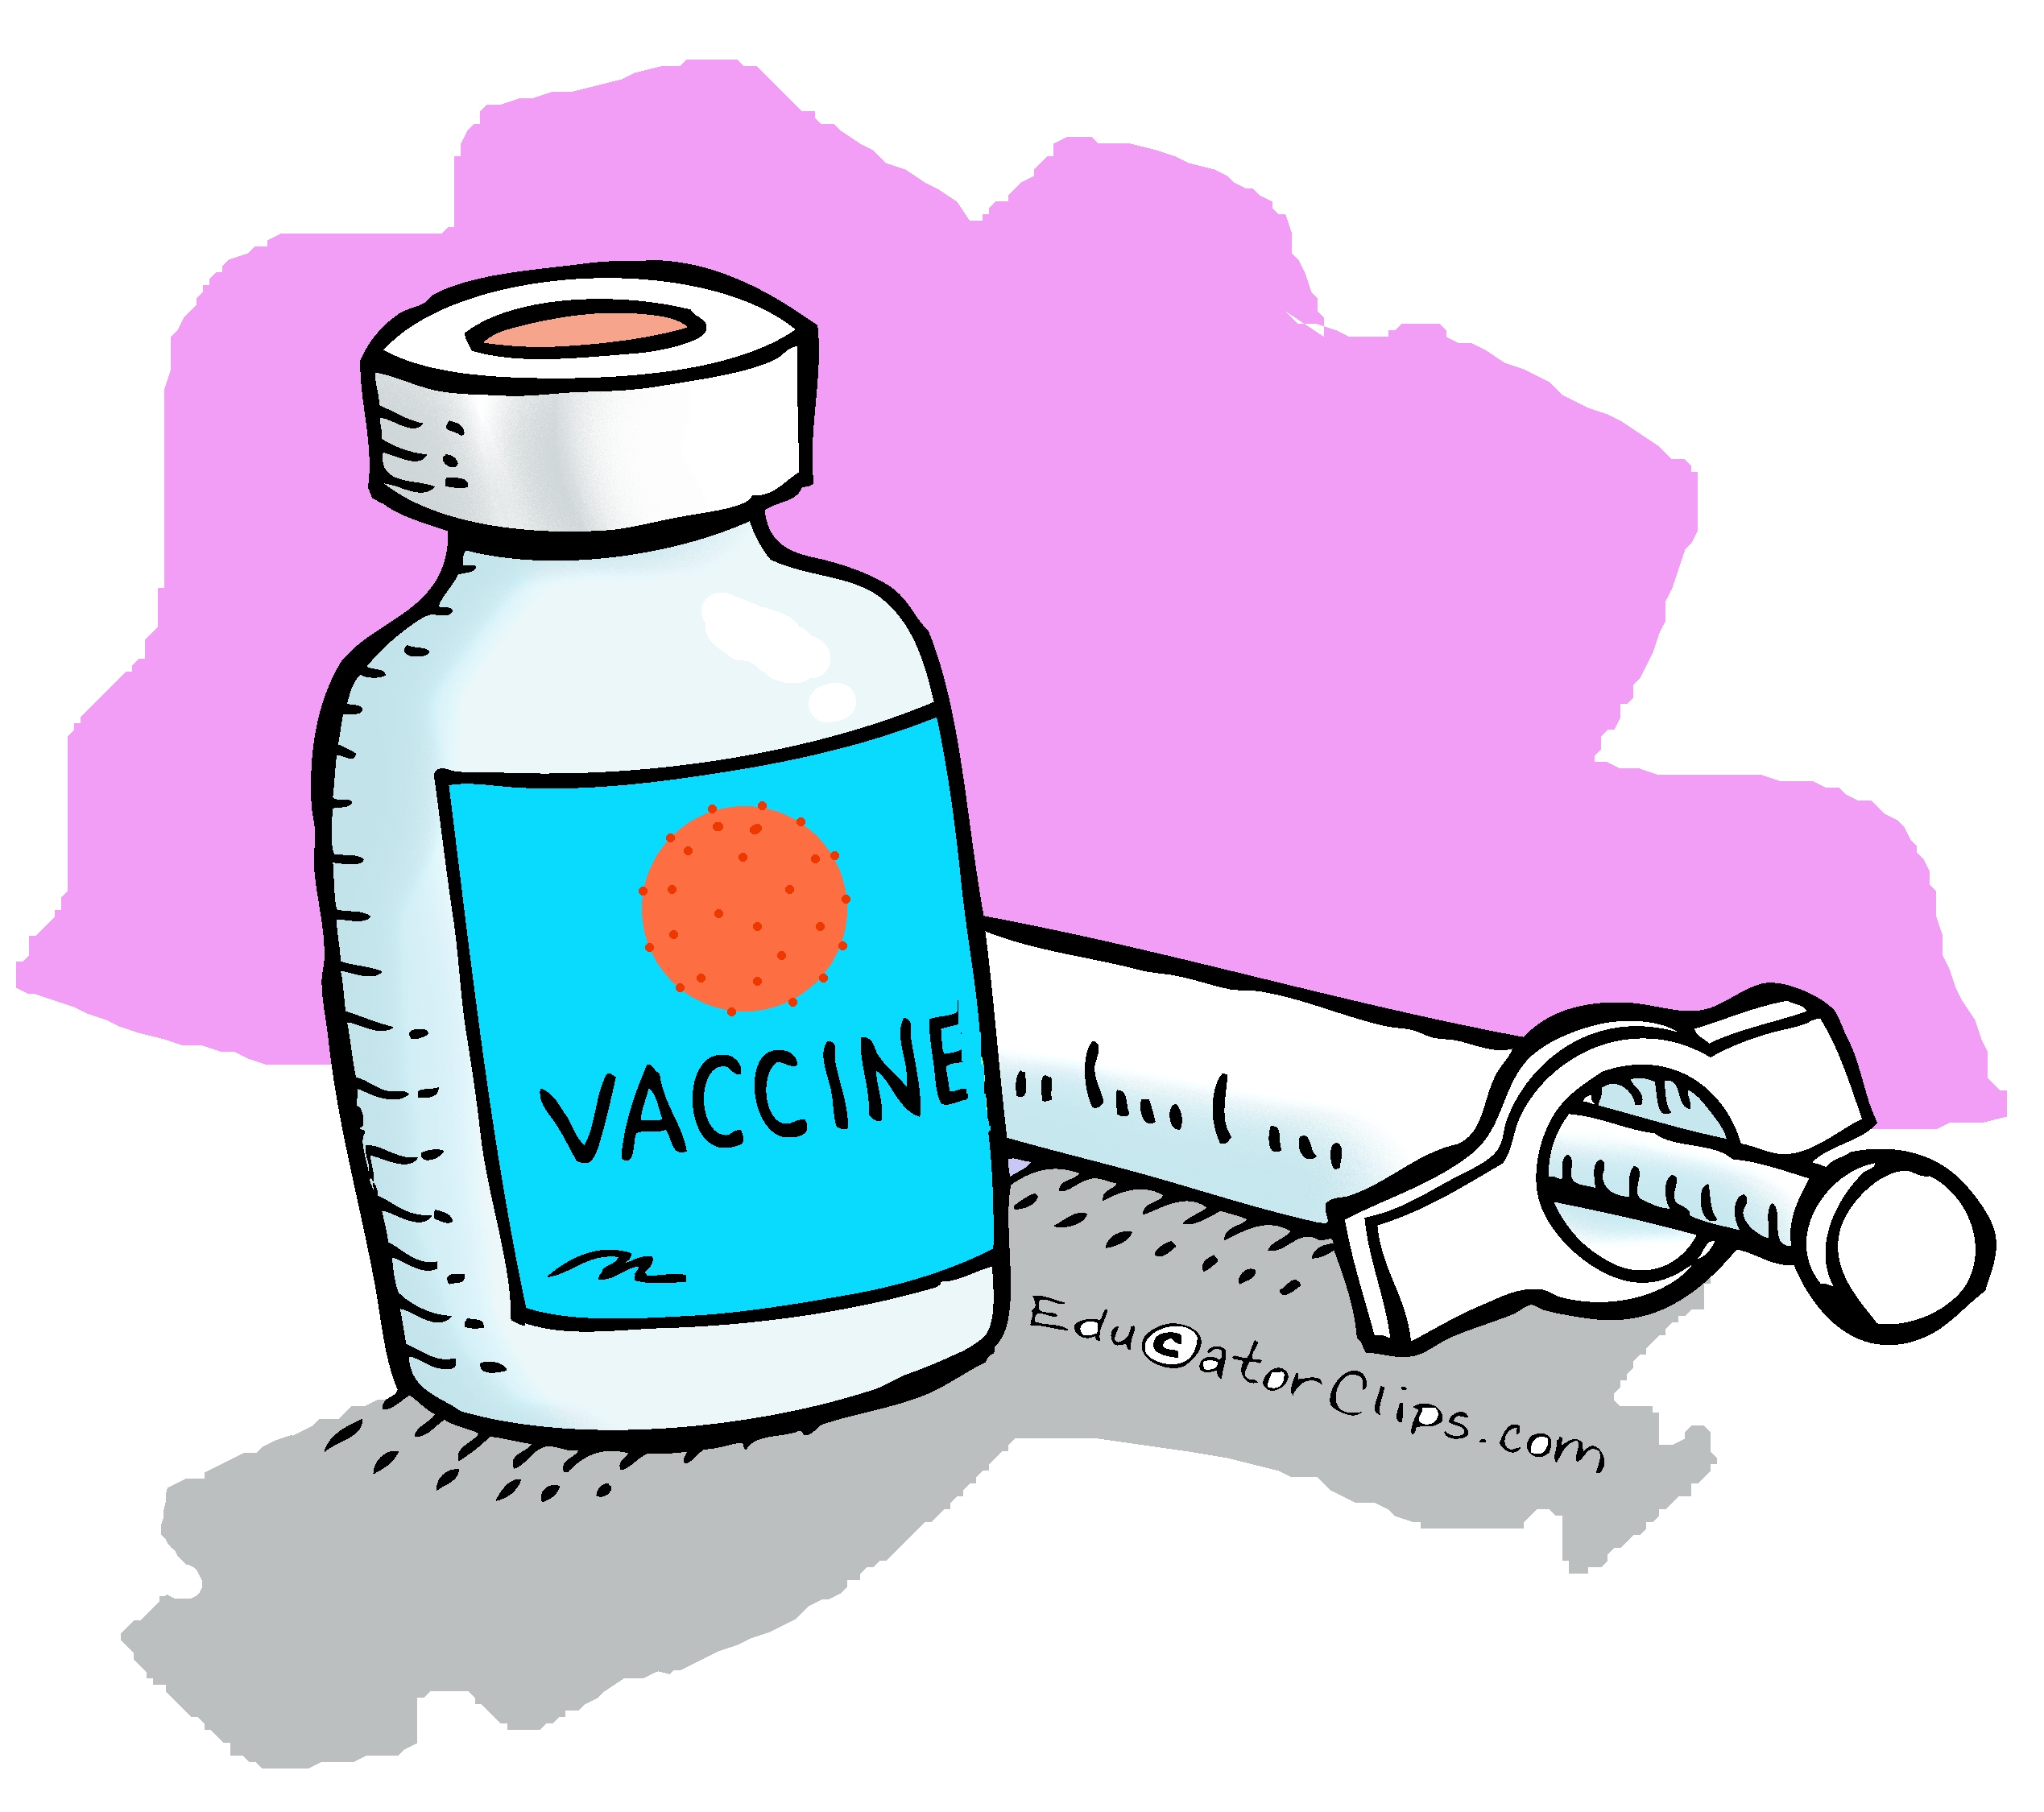 virus vaccine clip art, vaccination shot clip art,vax,health,illness prevention